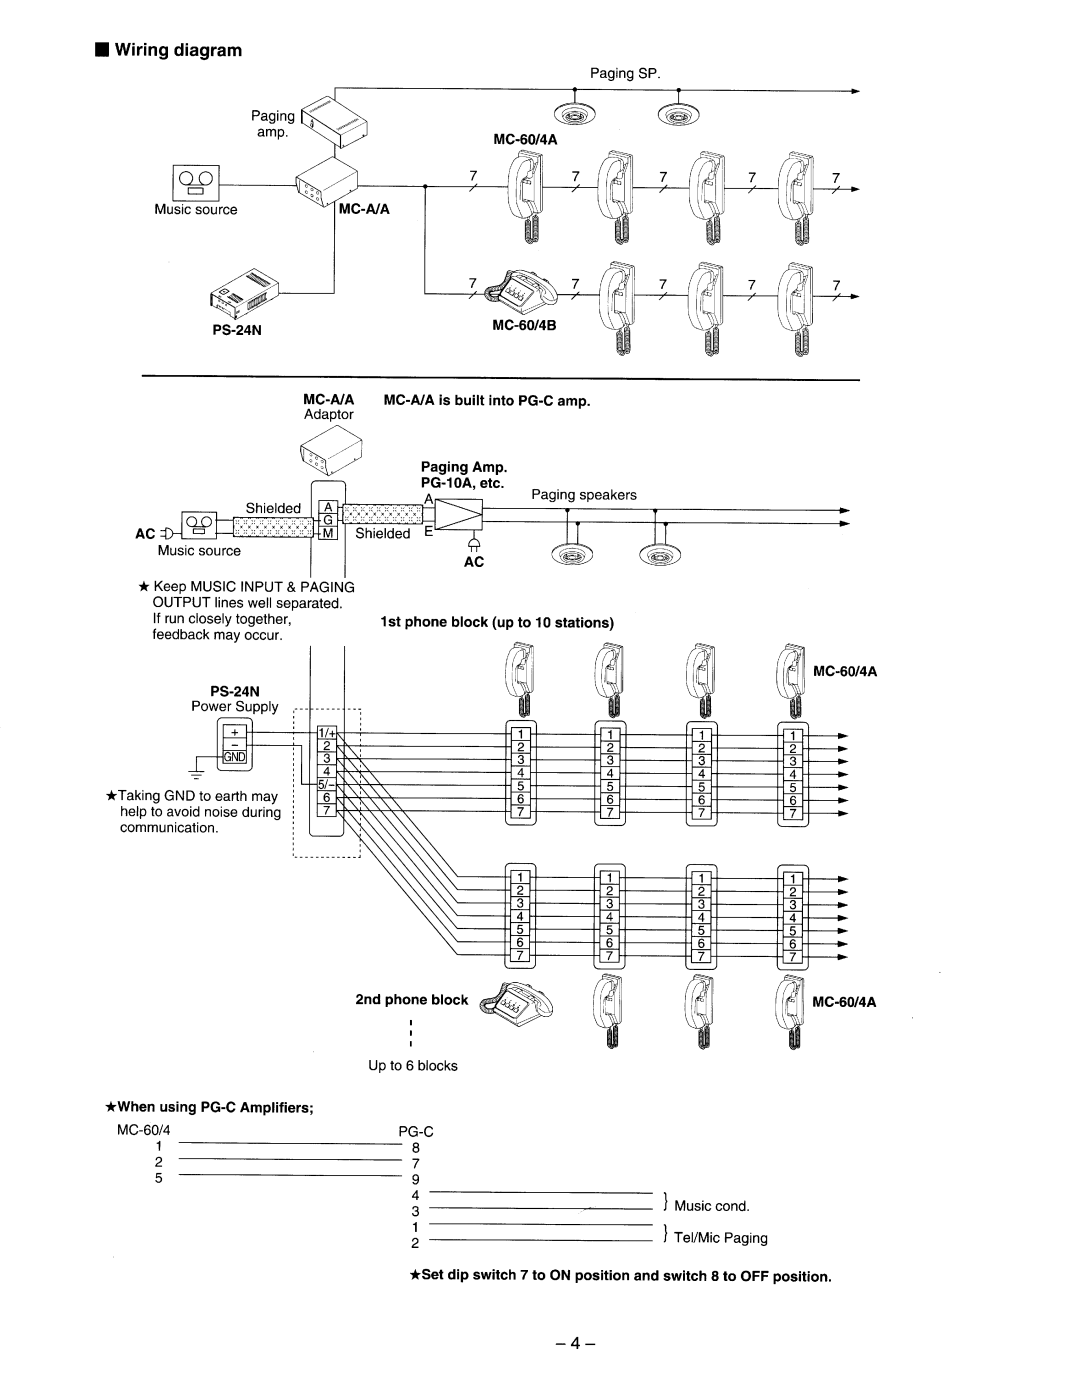 Aiphone 4A, MC60 manual 